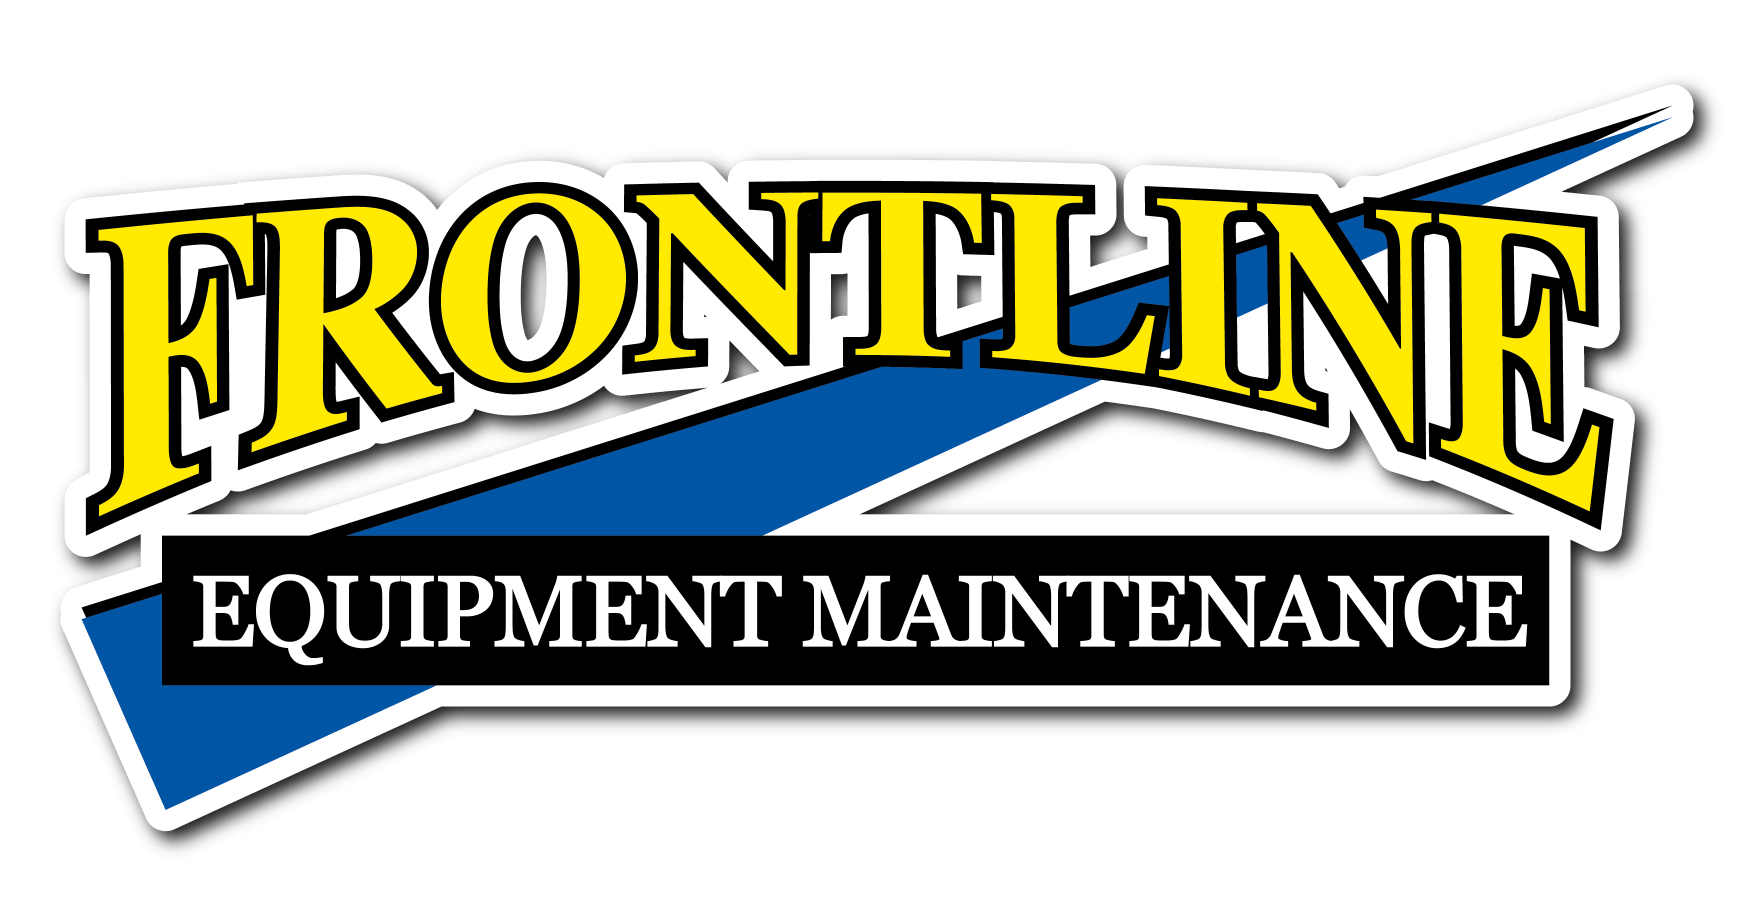 Frontline Equipment Maintenance